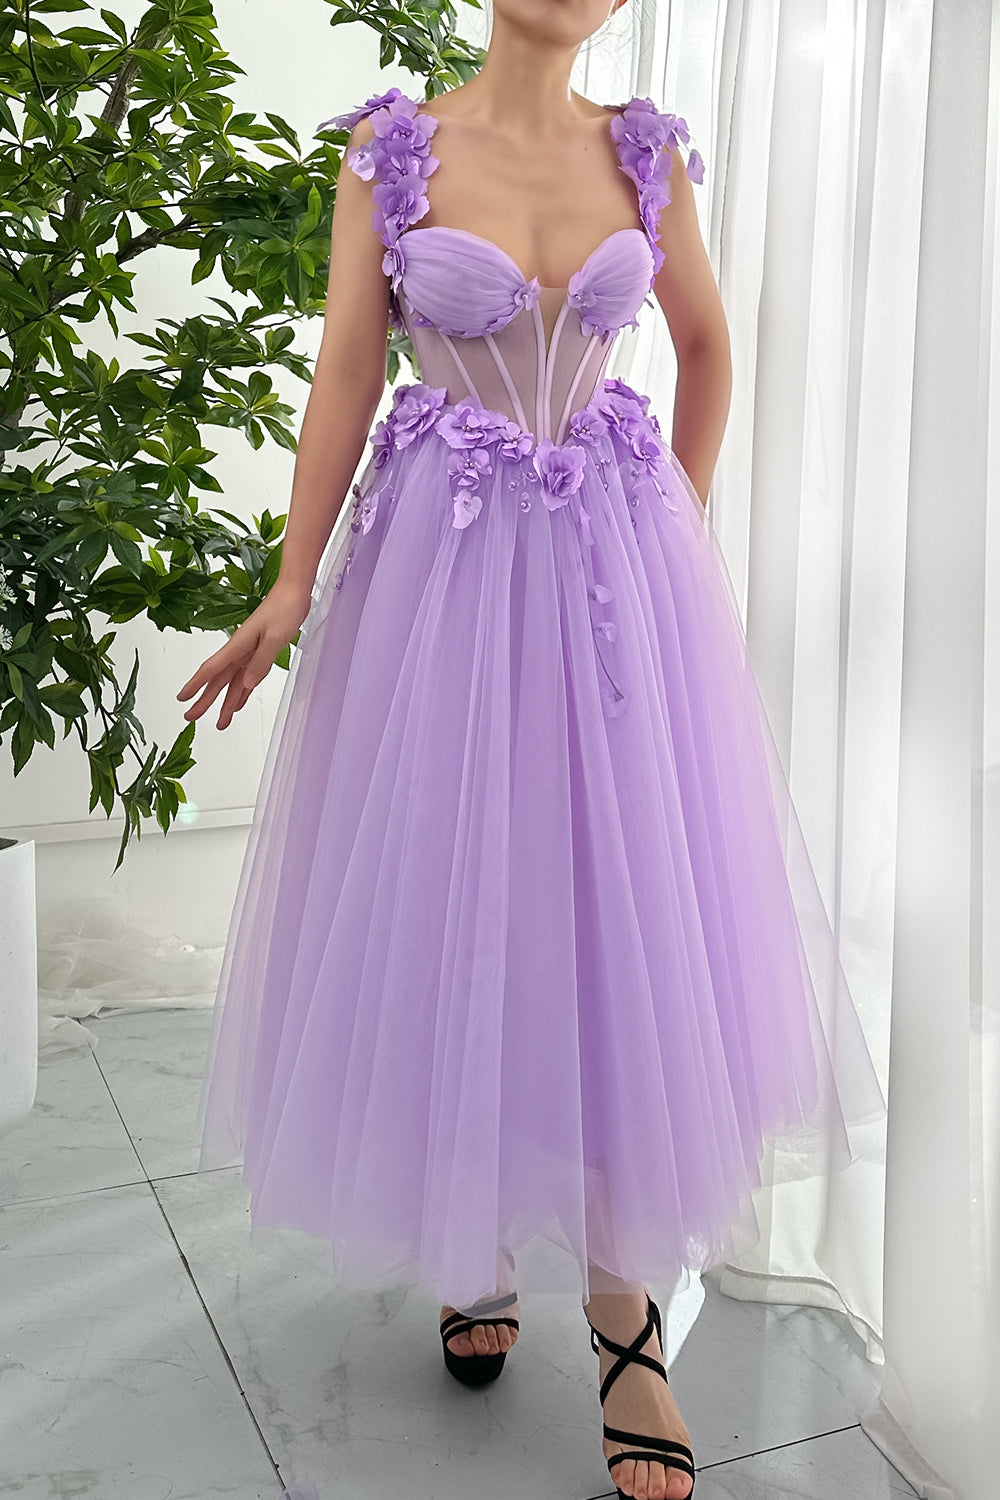 Corset 3D Floral Lavender Dress with Removable Off Shoulders